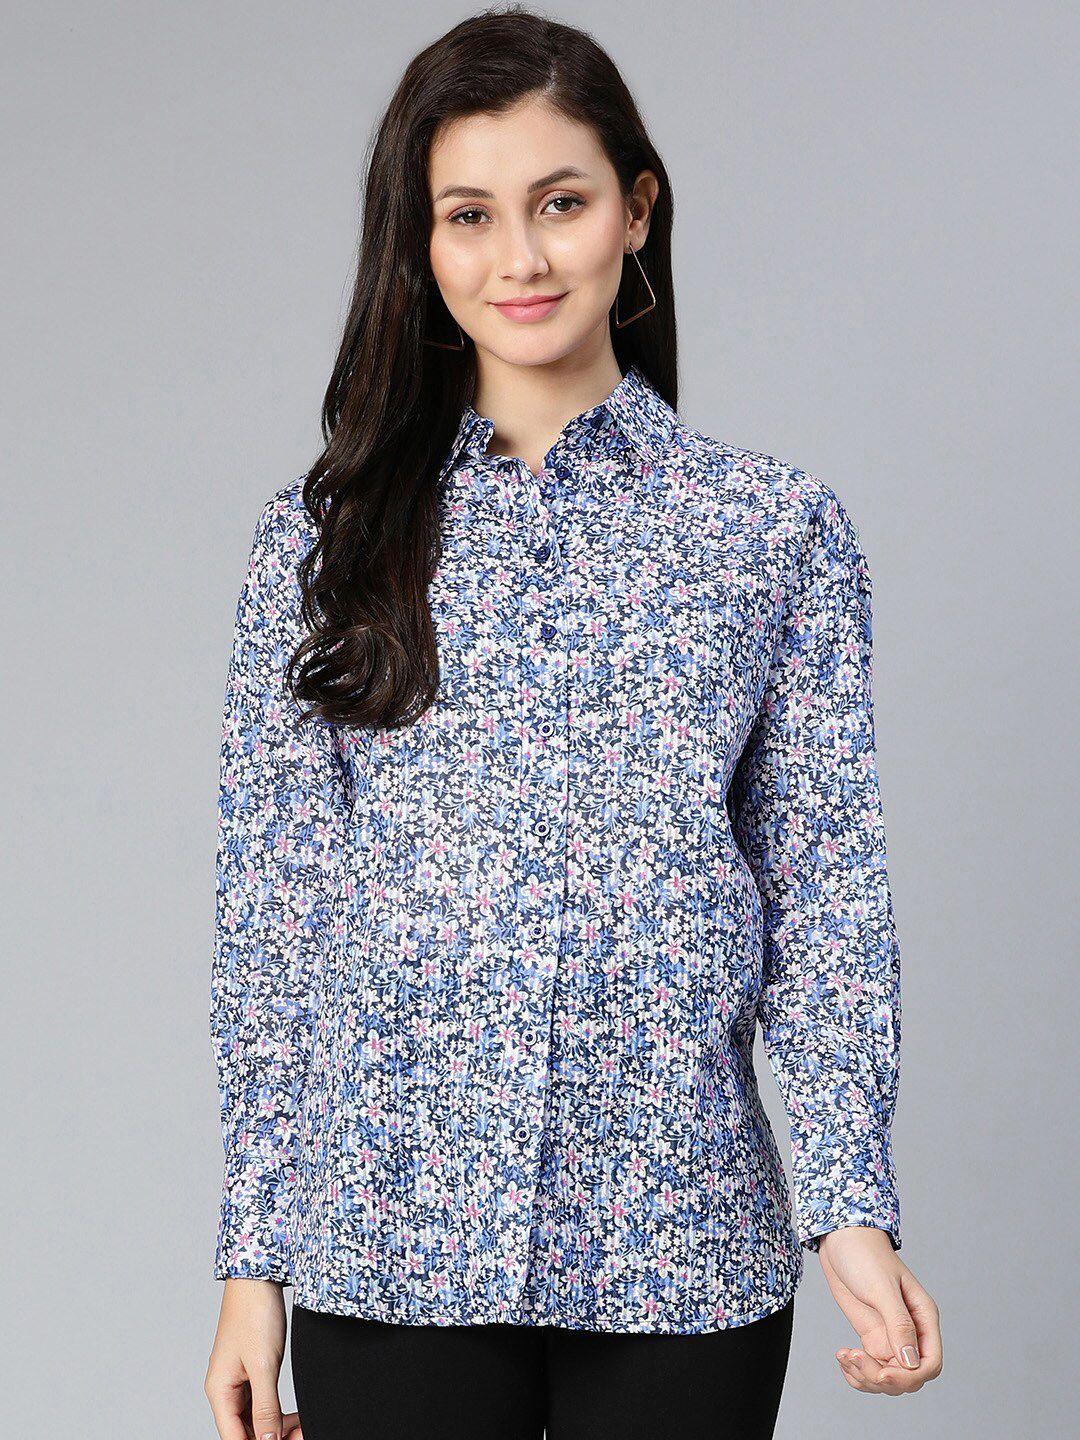 oxolloxo women blue classic floral printed semi sheer formal shirt